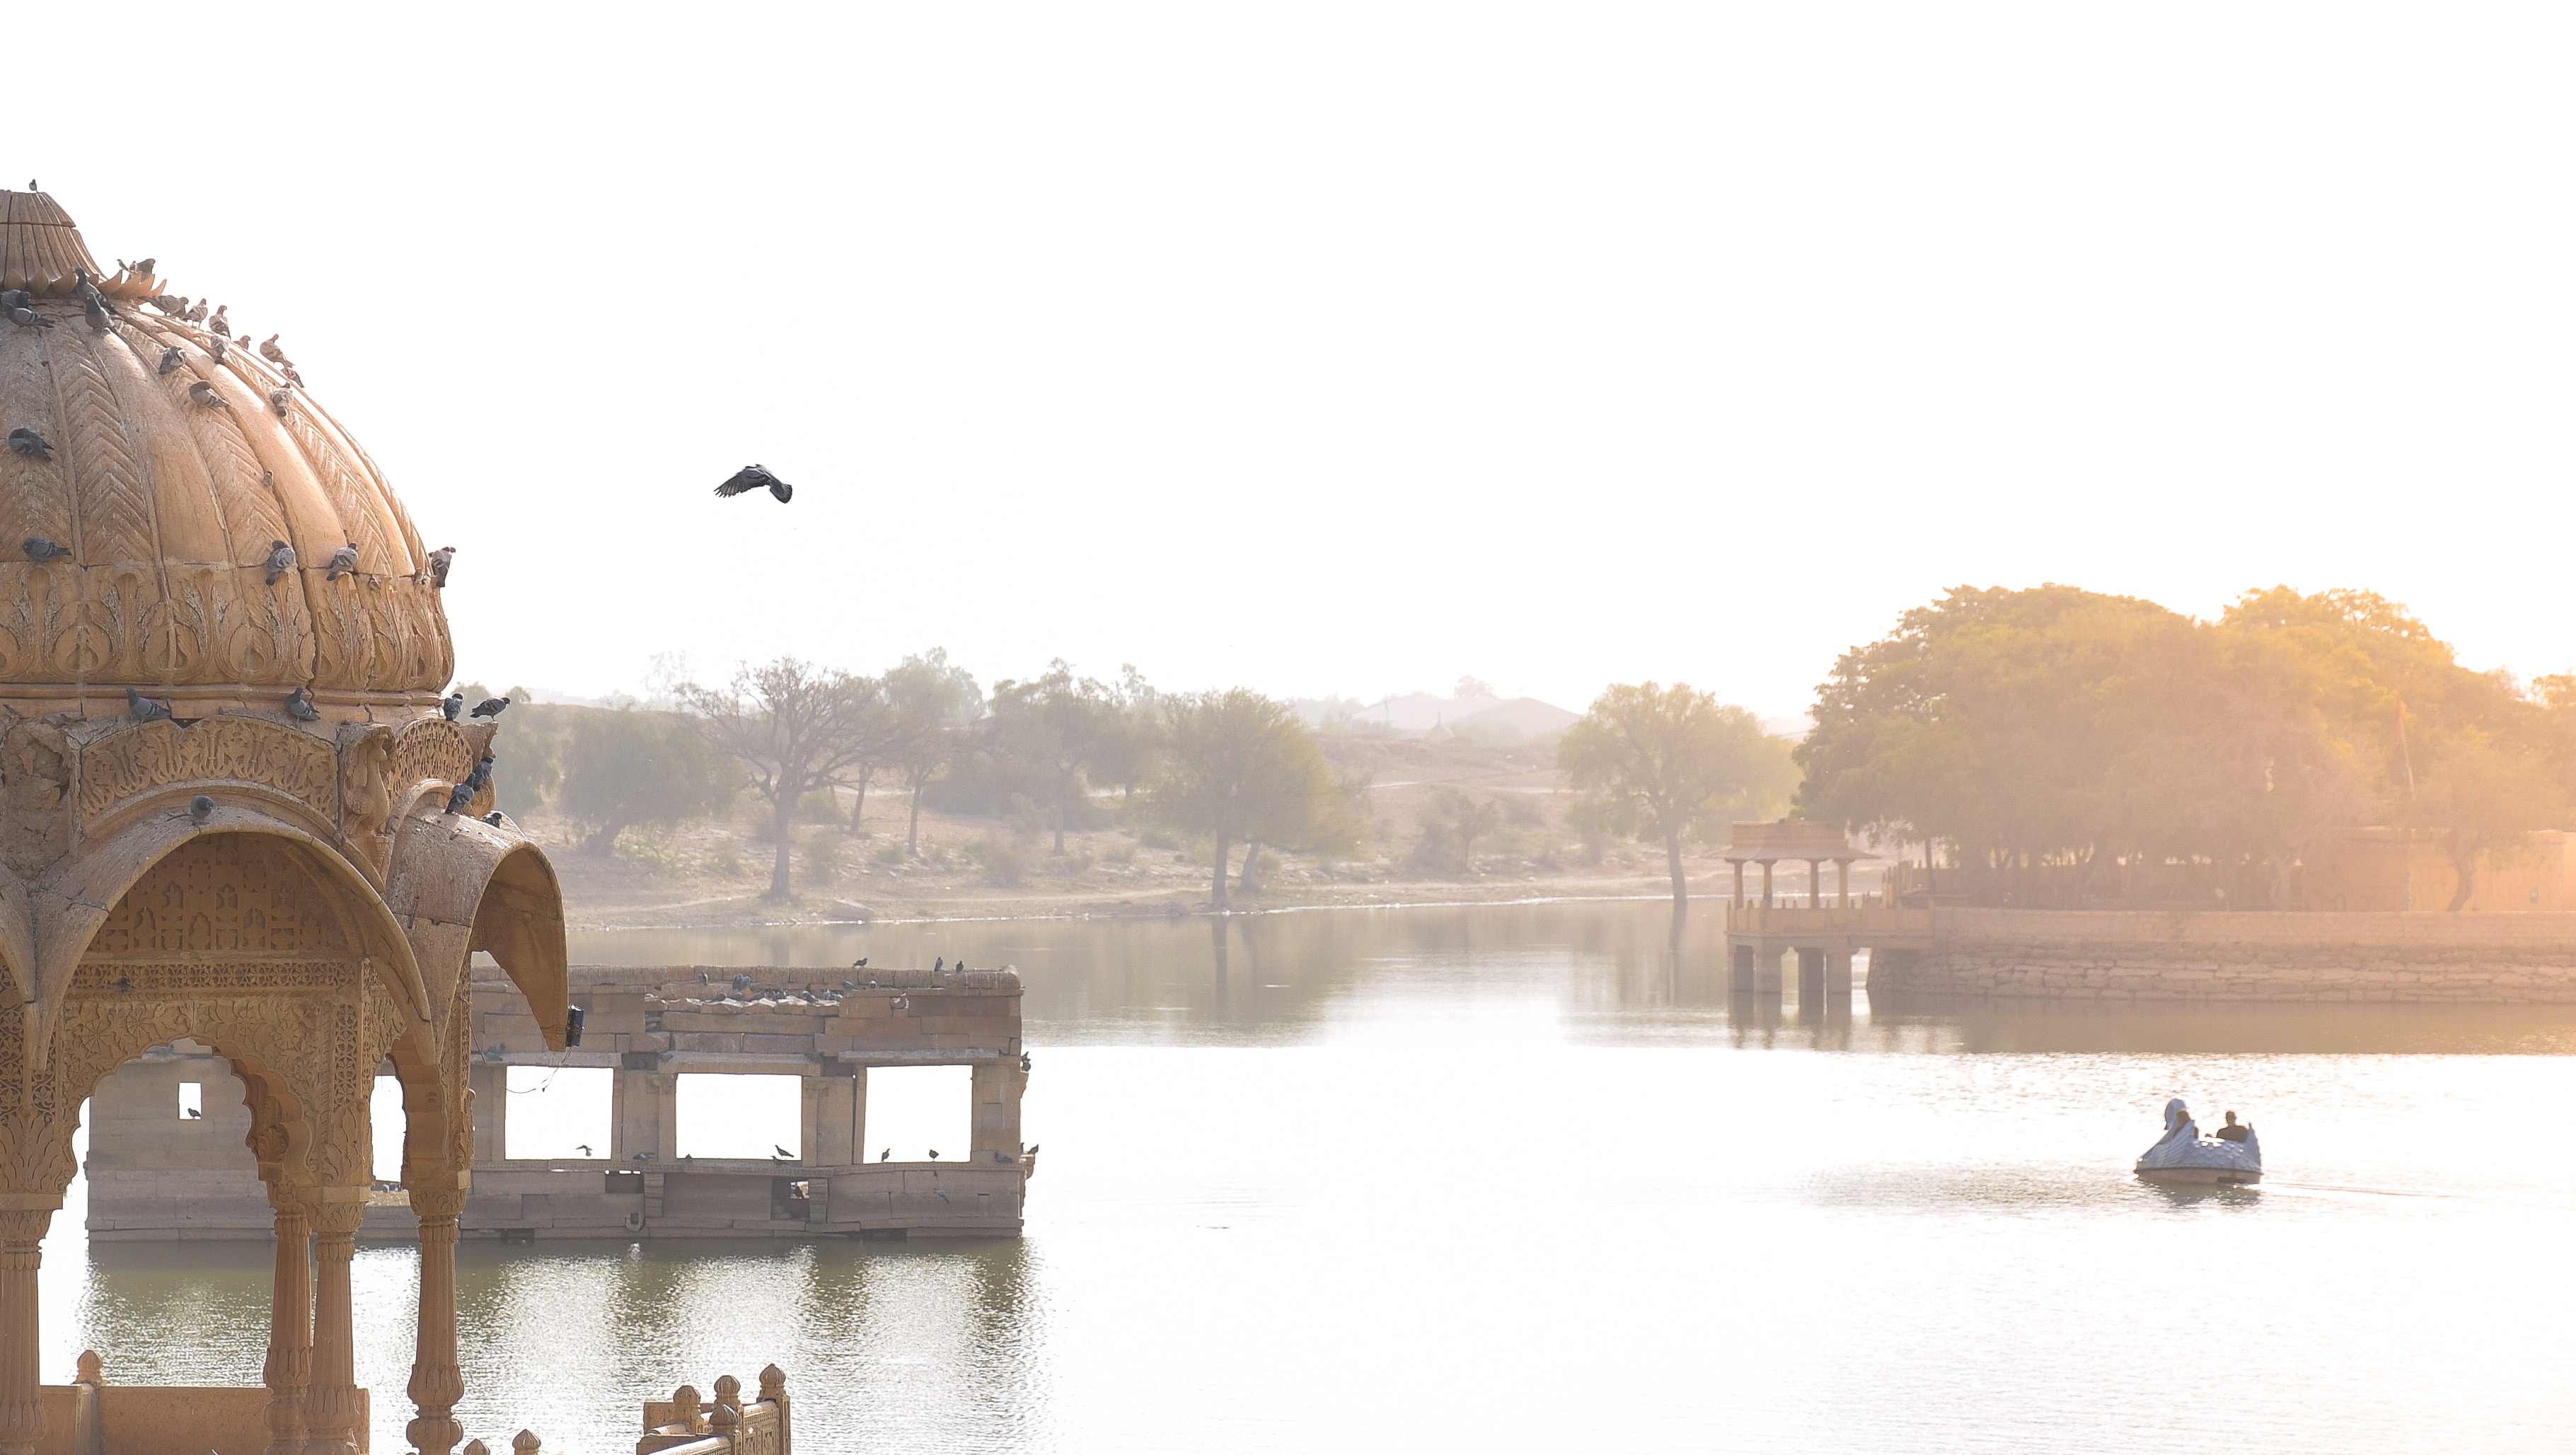  Jaisalmer: The Golden City